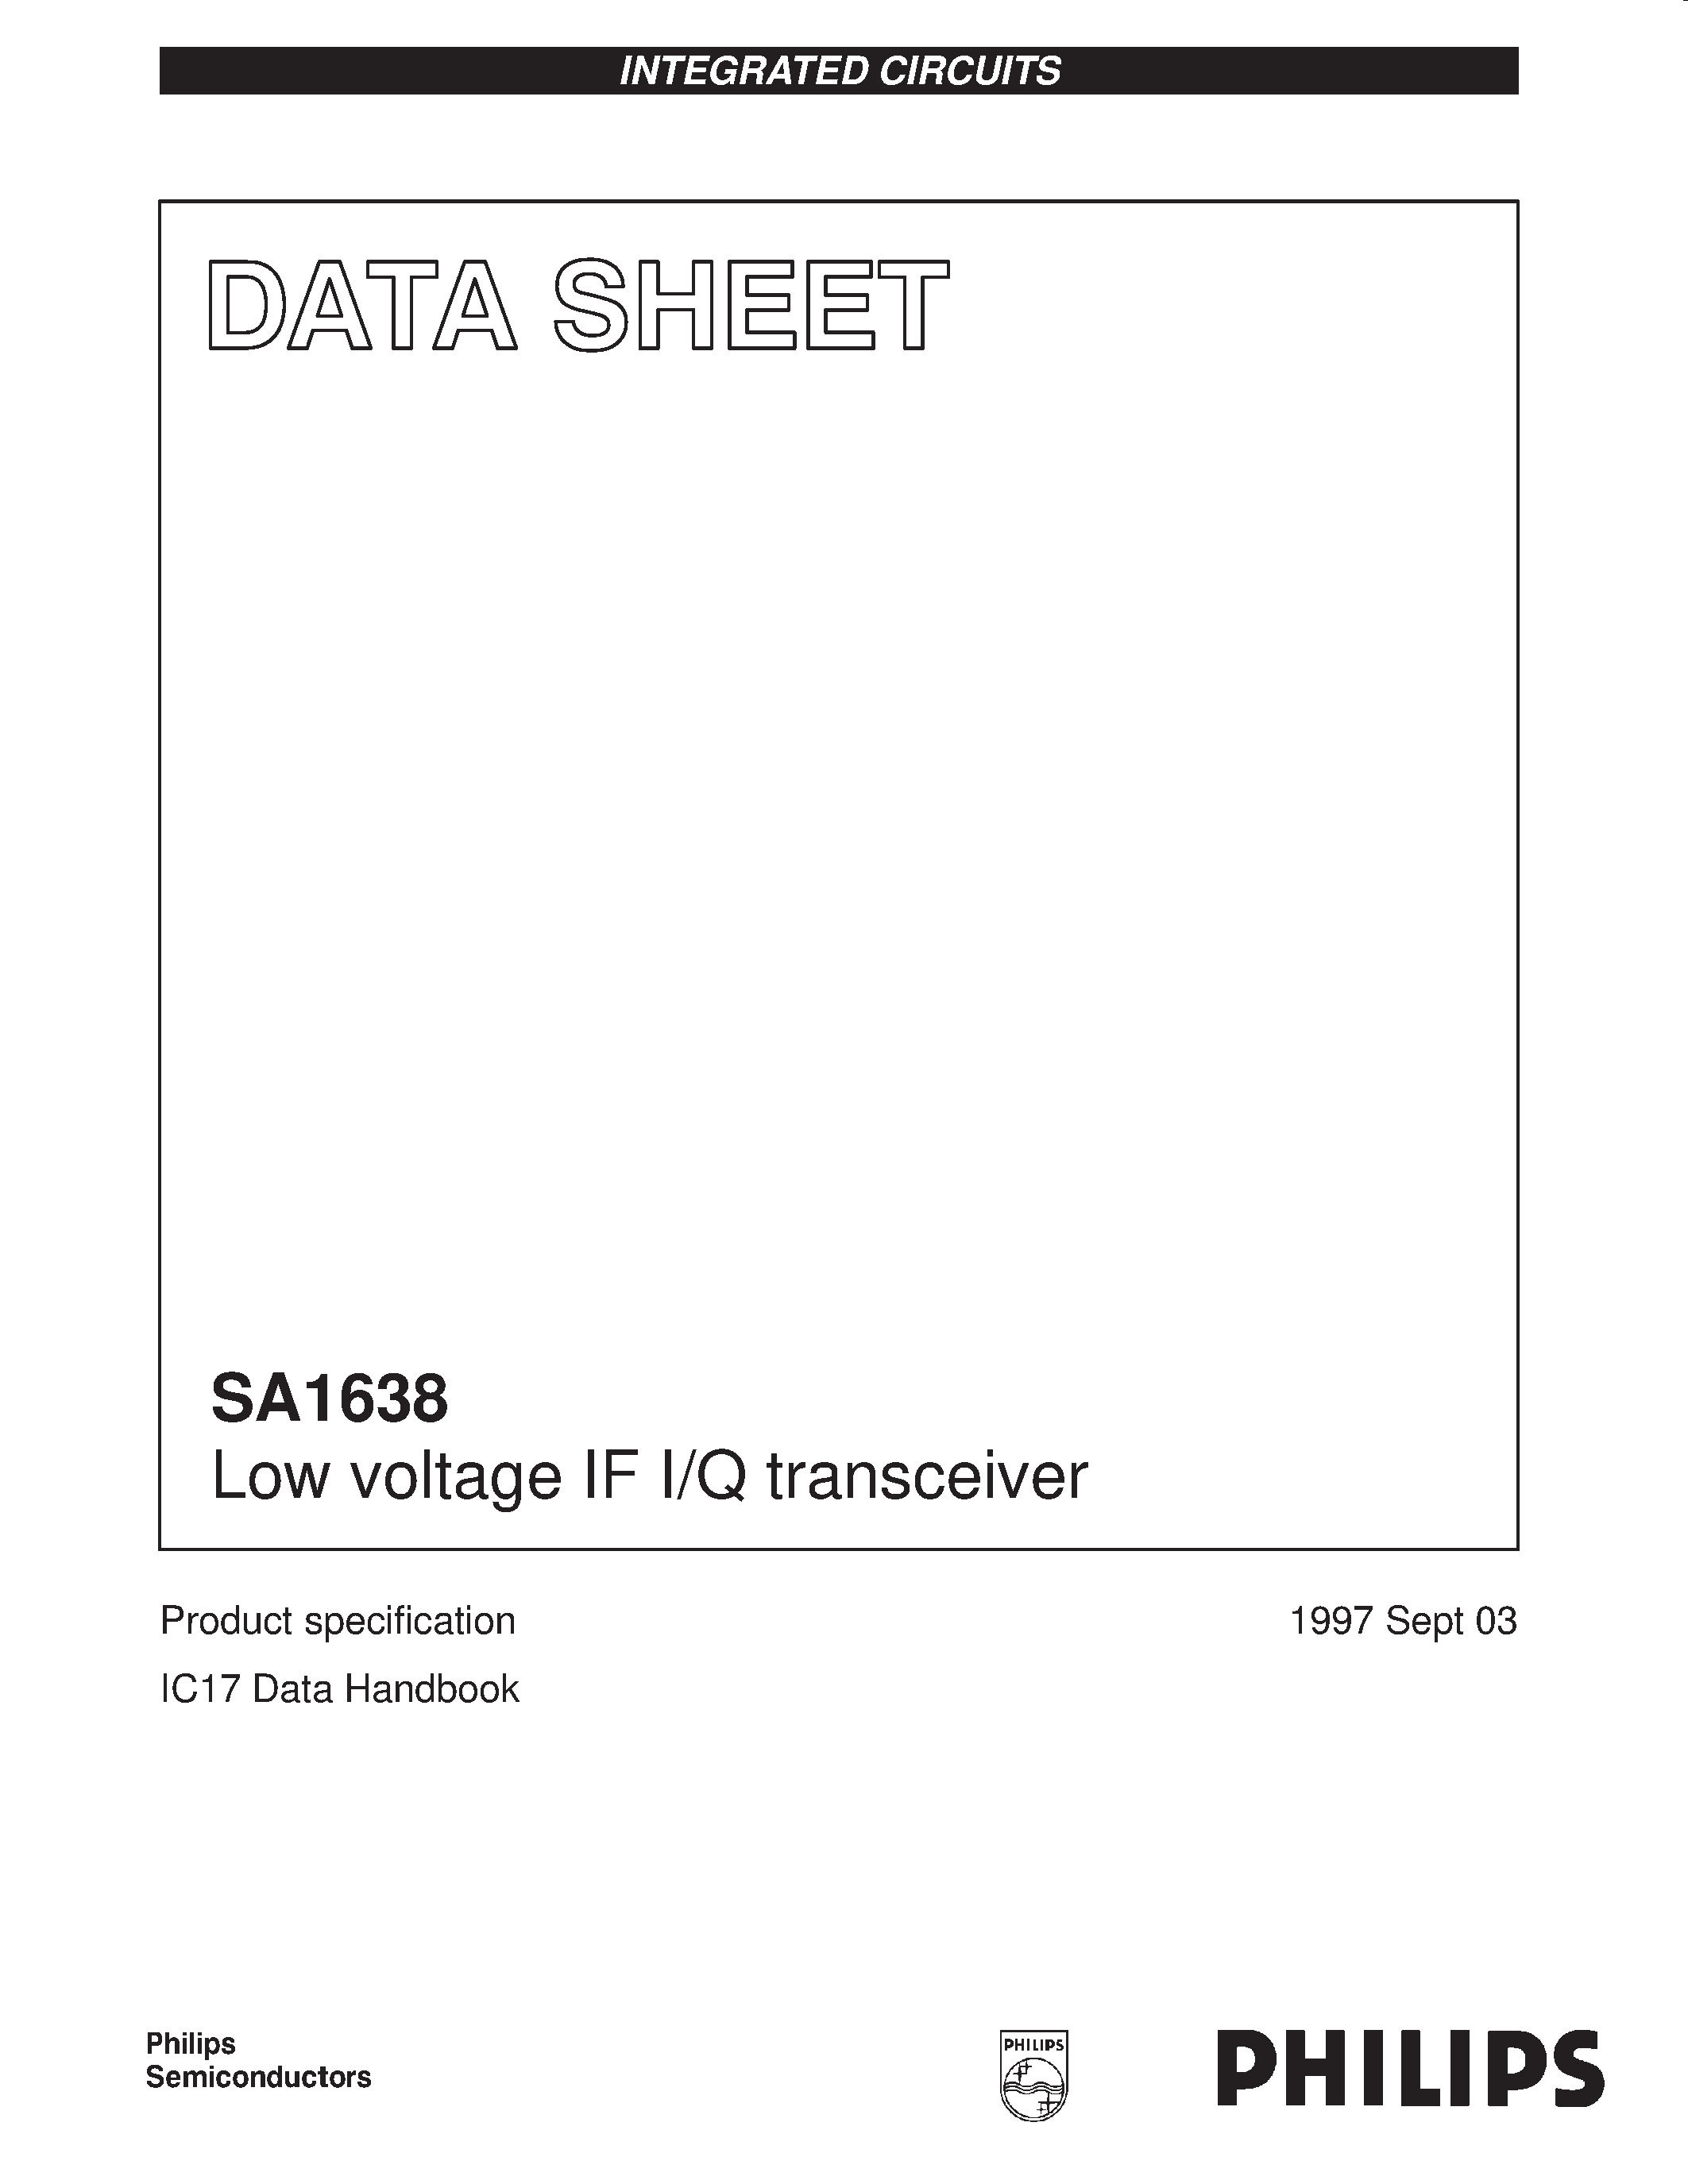 Даташит SA1638BE - Low voltage IF I/Q transceiver страница 1